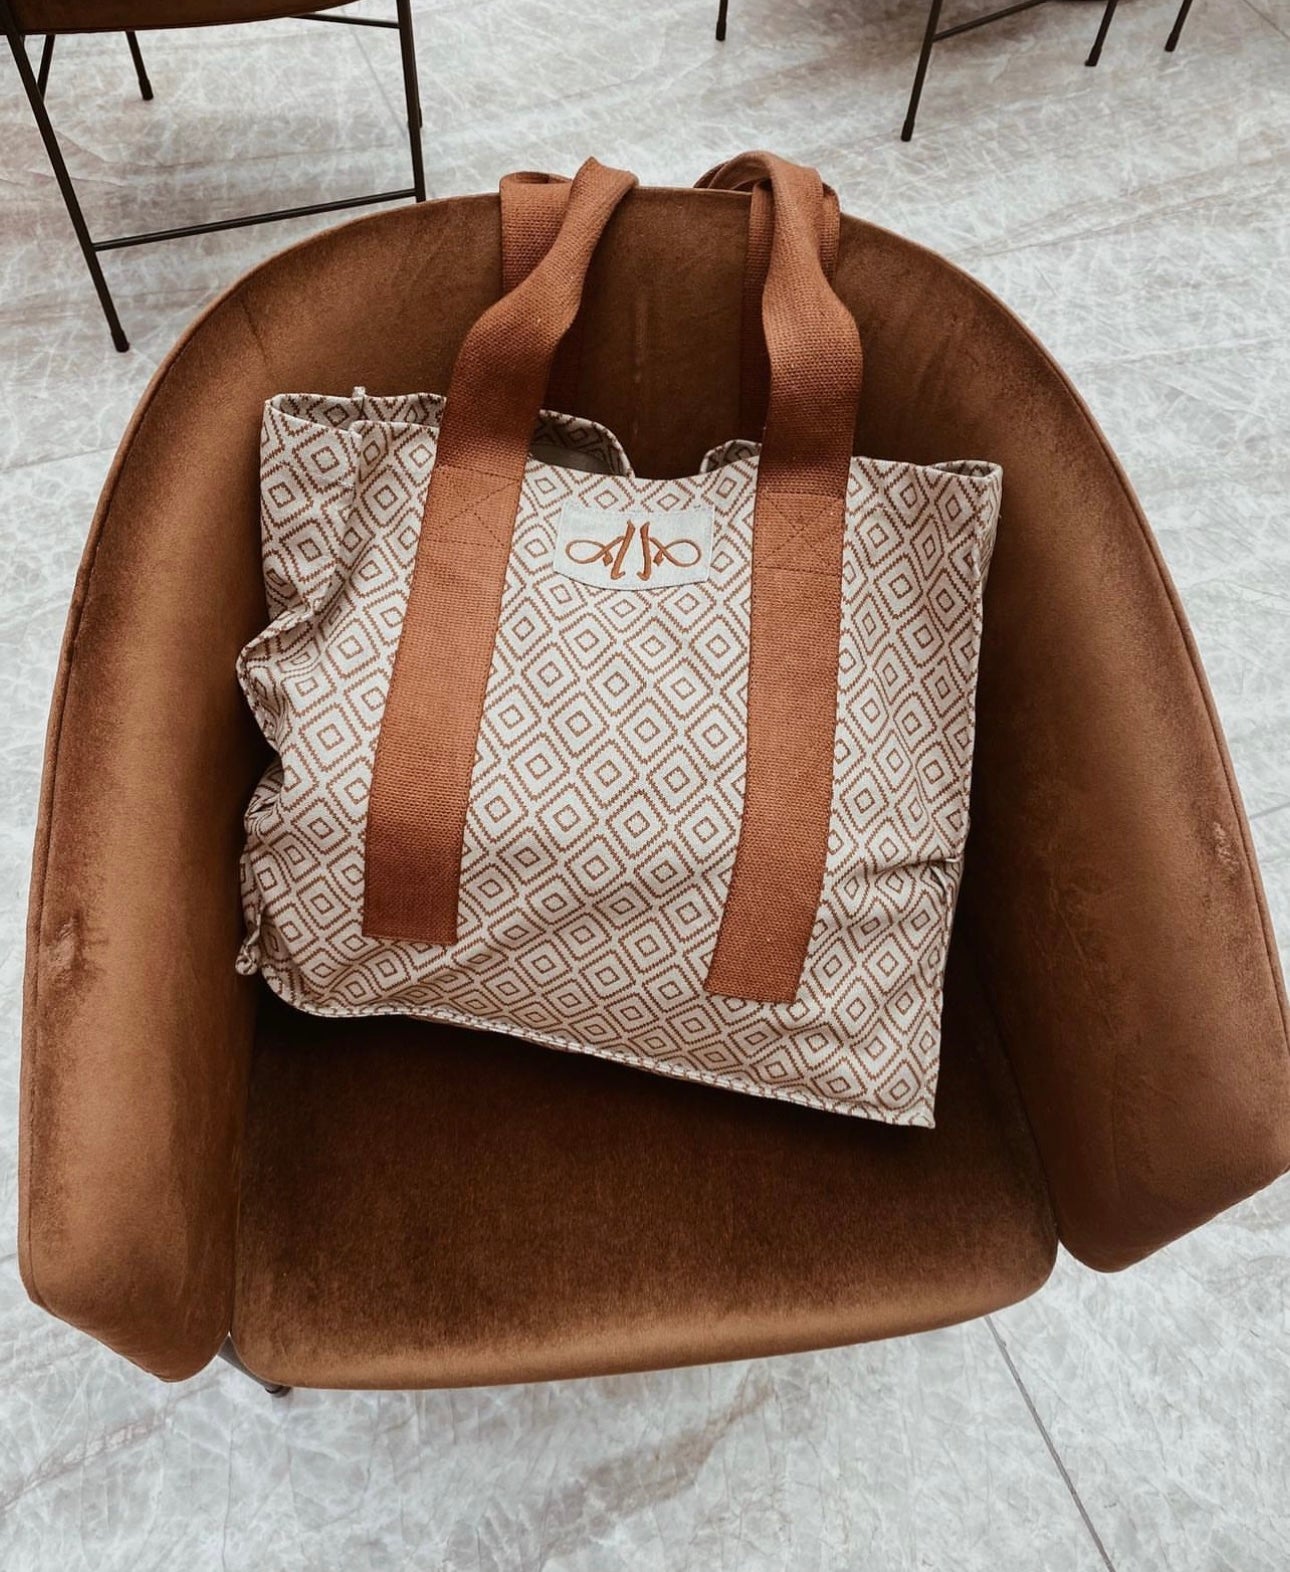 AndreA - Fabric Tote Bag